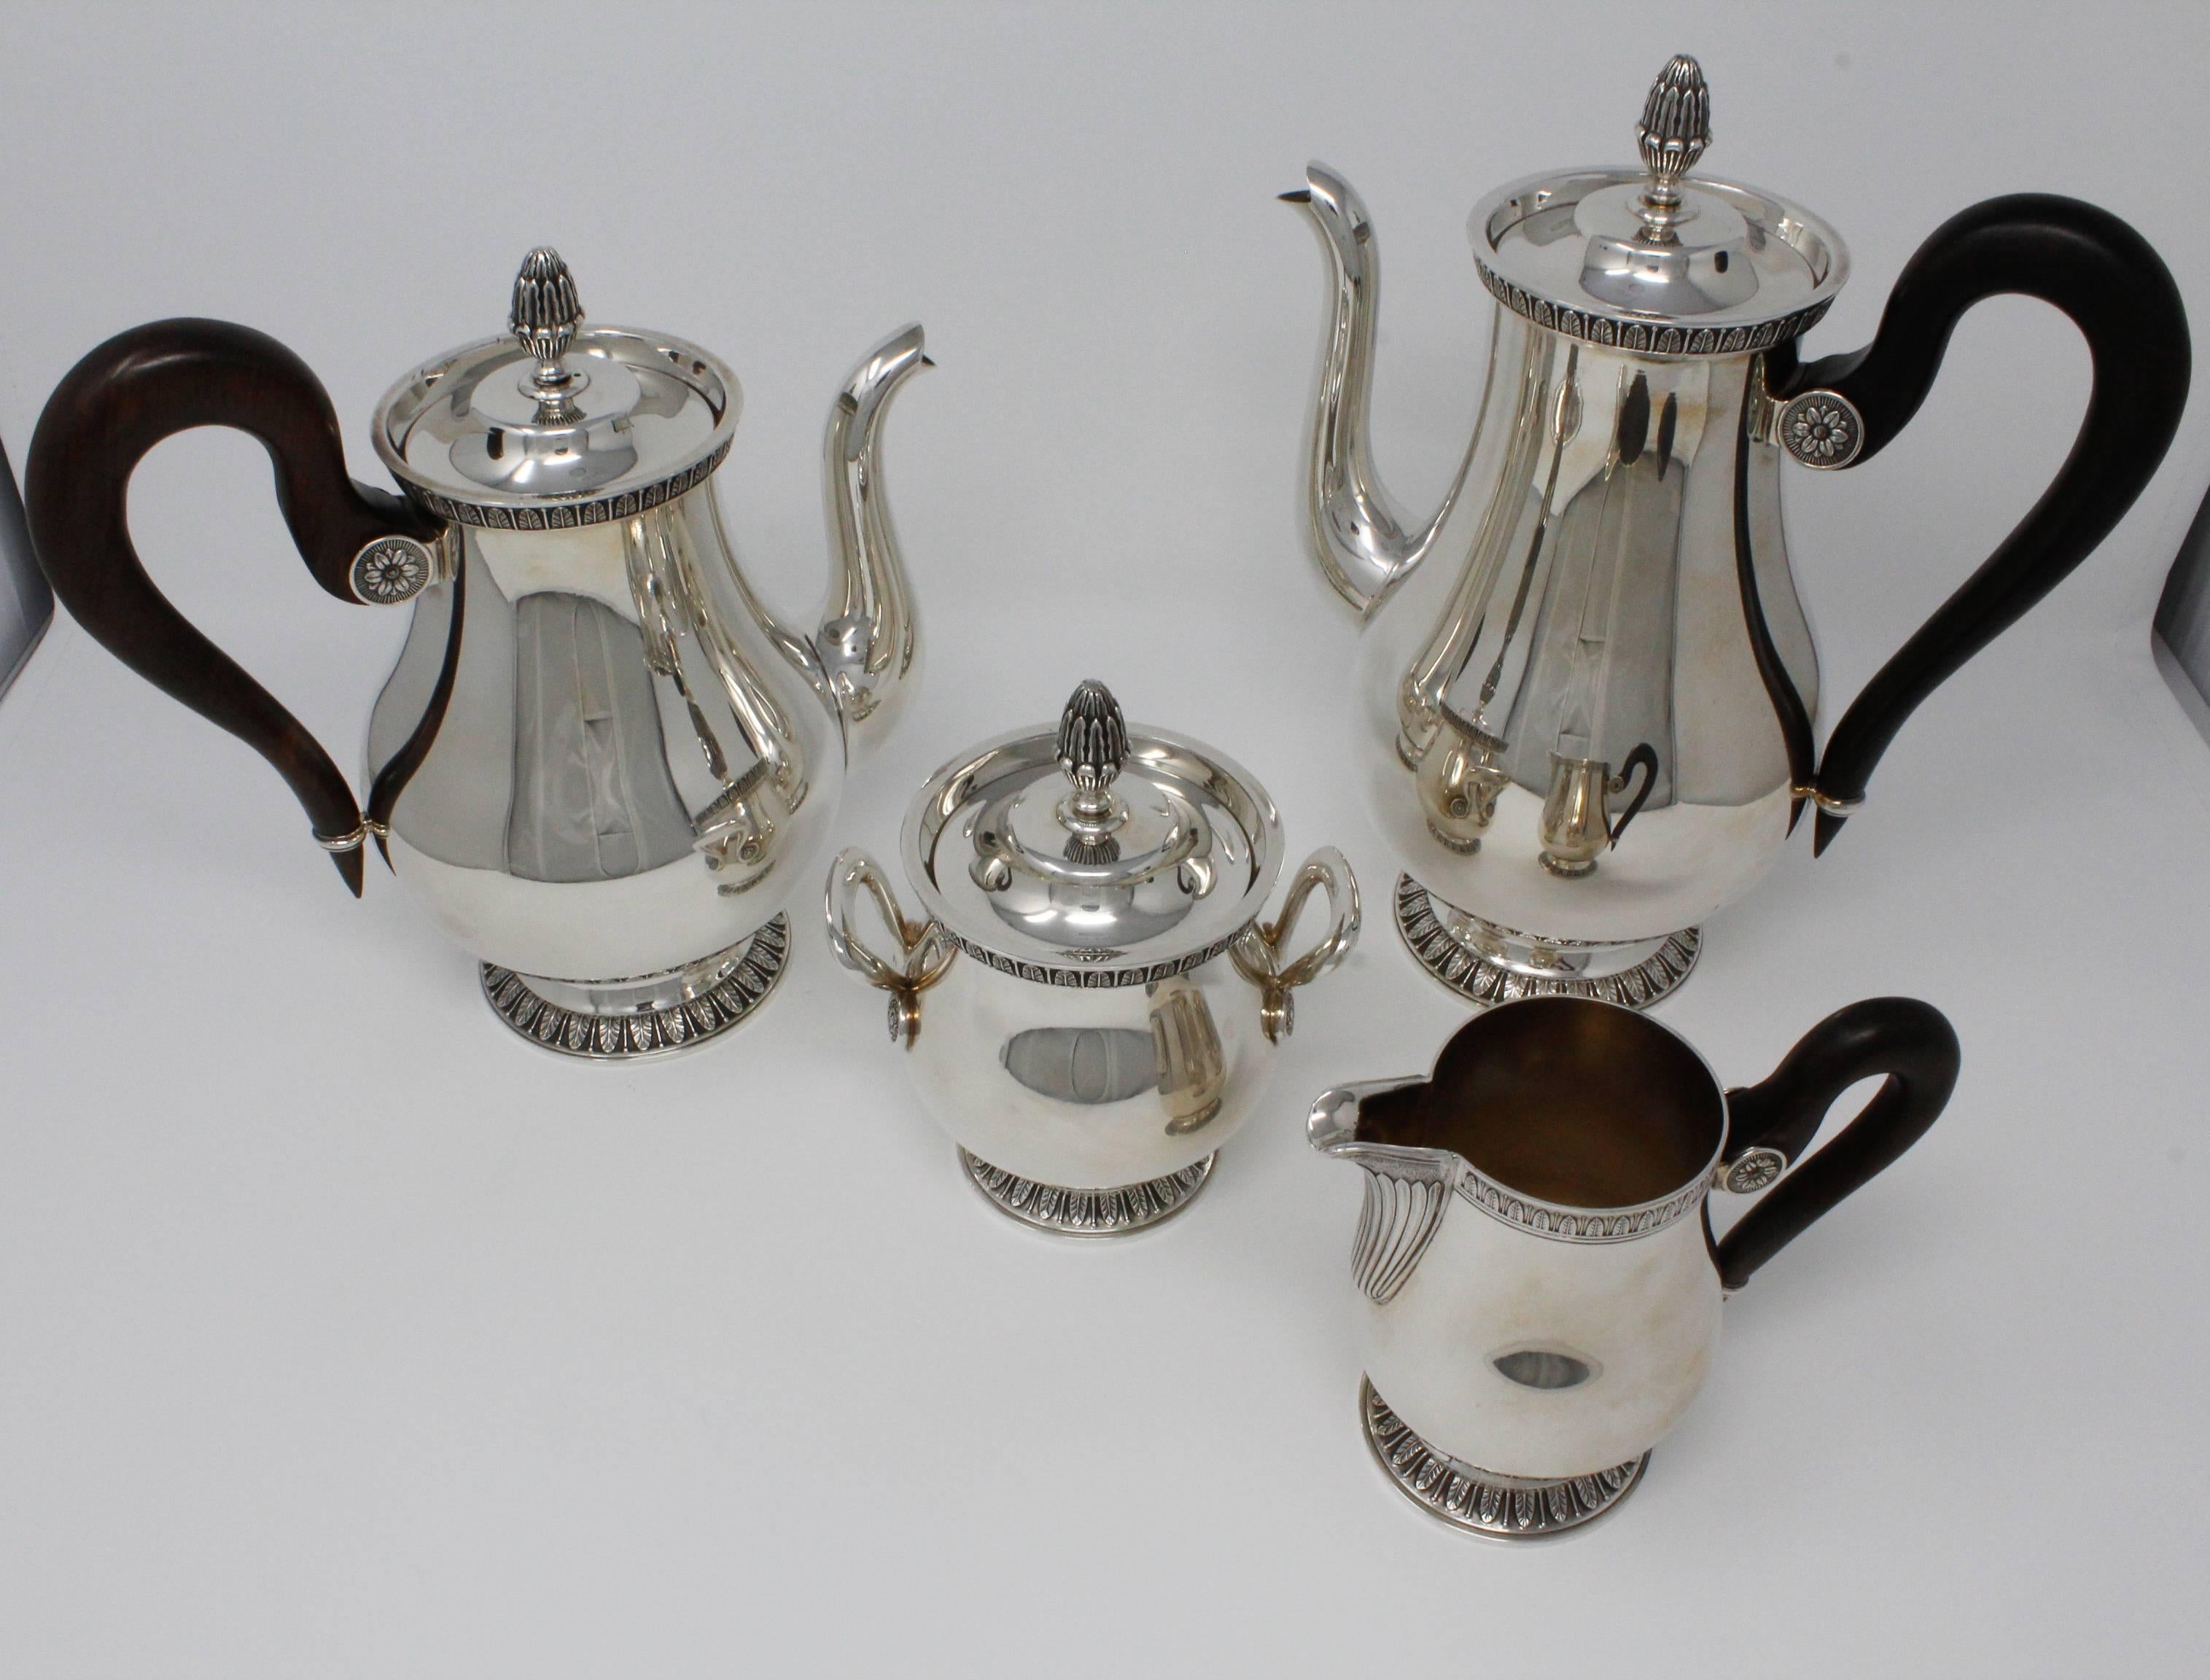 4 Pc. Christofle Tea Set, Silver Plated, Malmaison-Beauharnais Pattern. 

Includes Tea Pot, Coffee Pot, Sugar Bowl, and Creamer. 